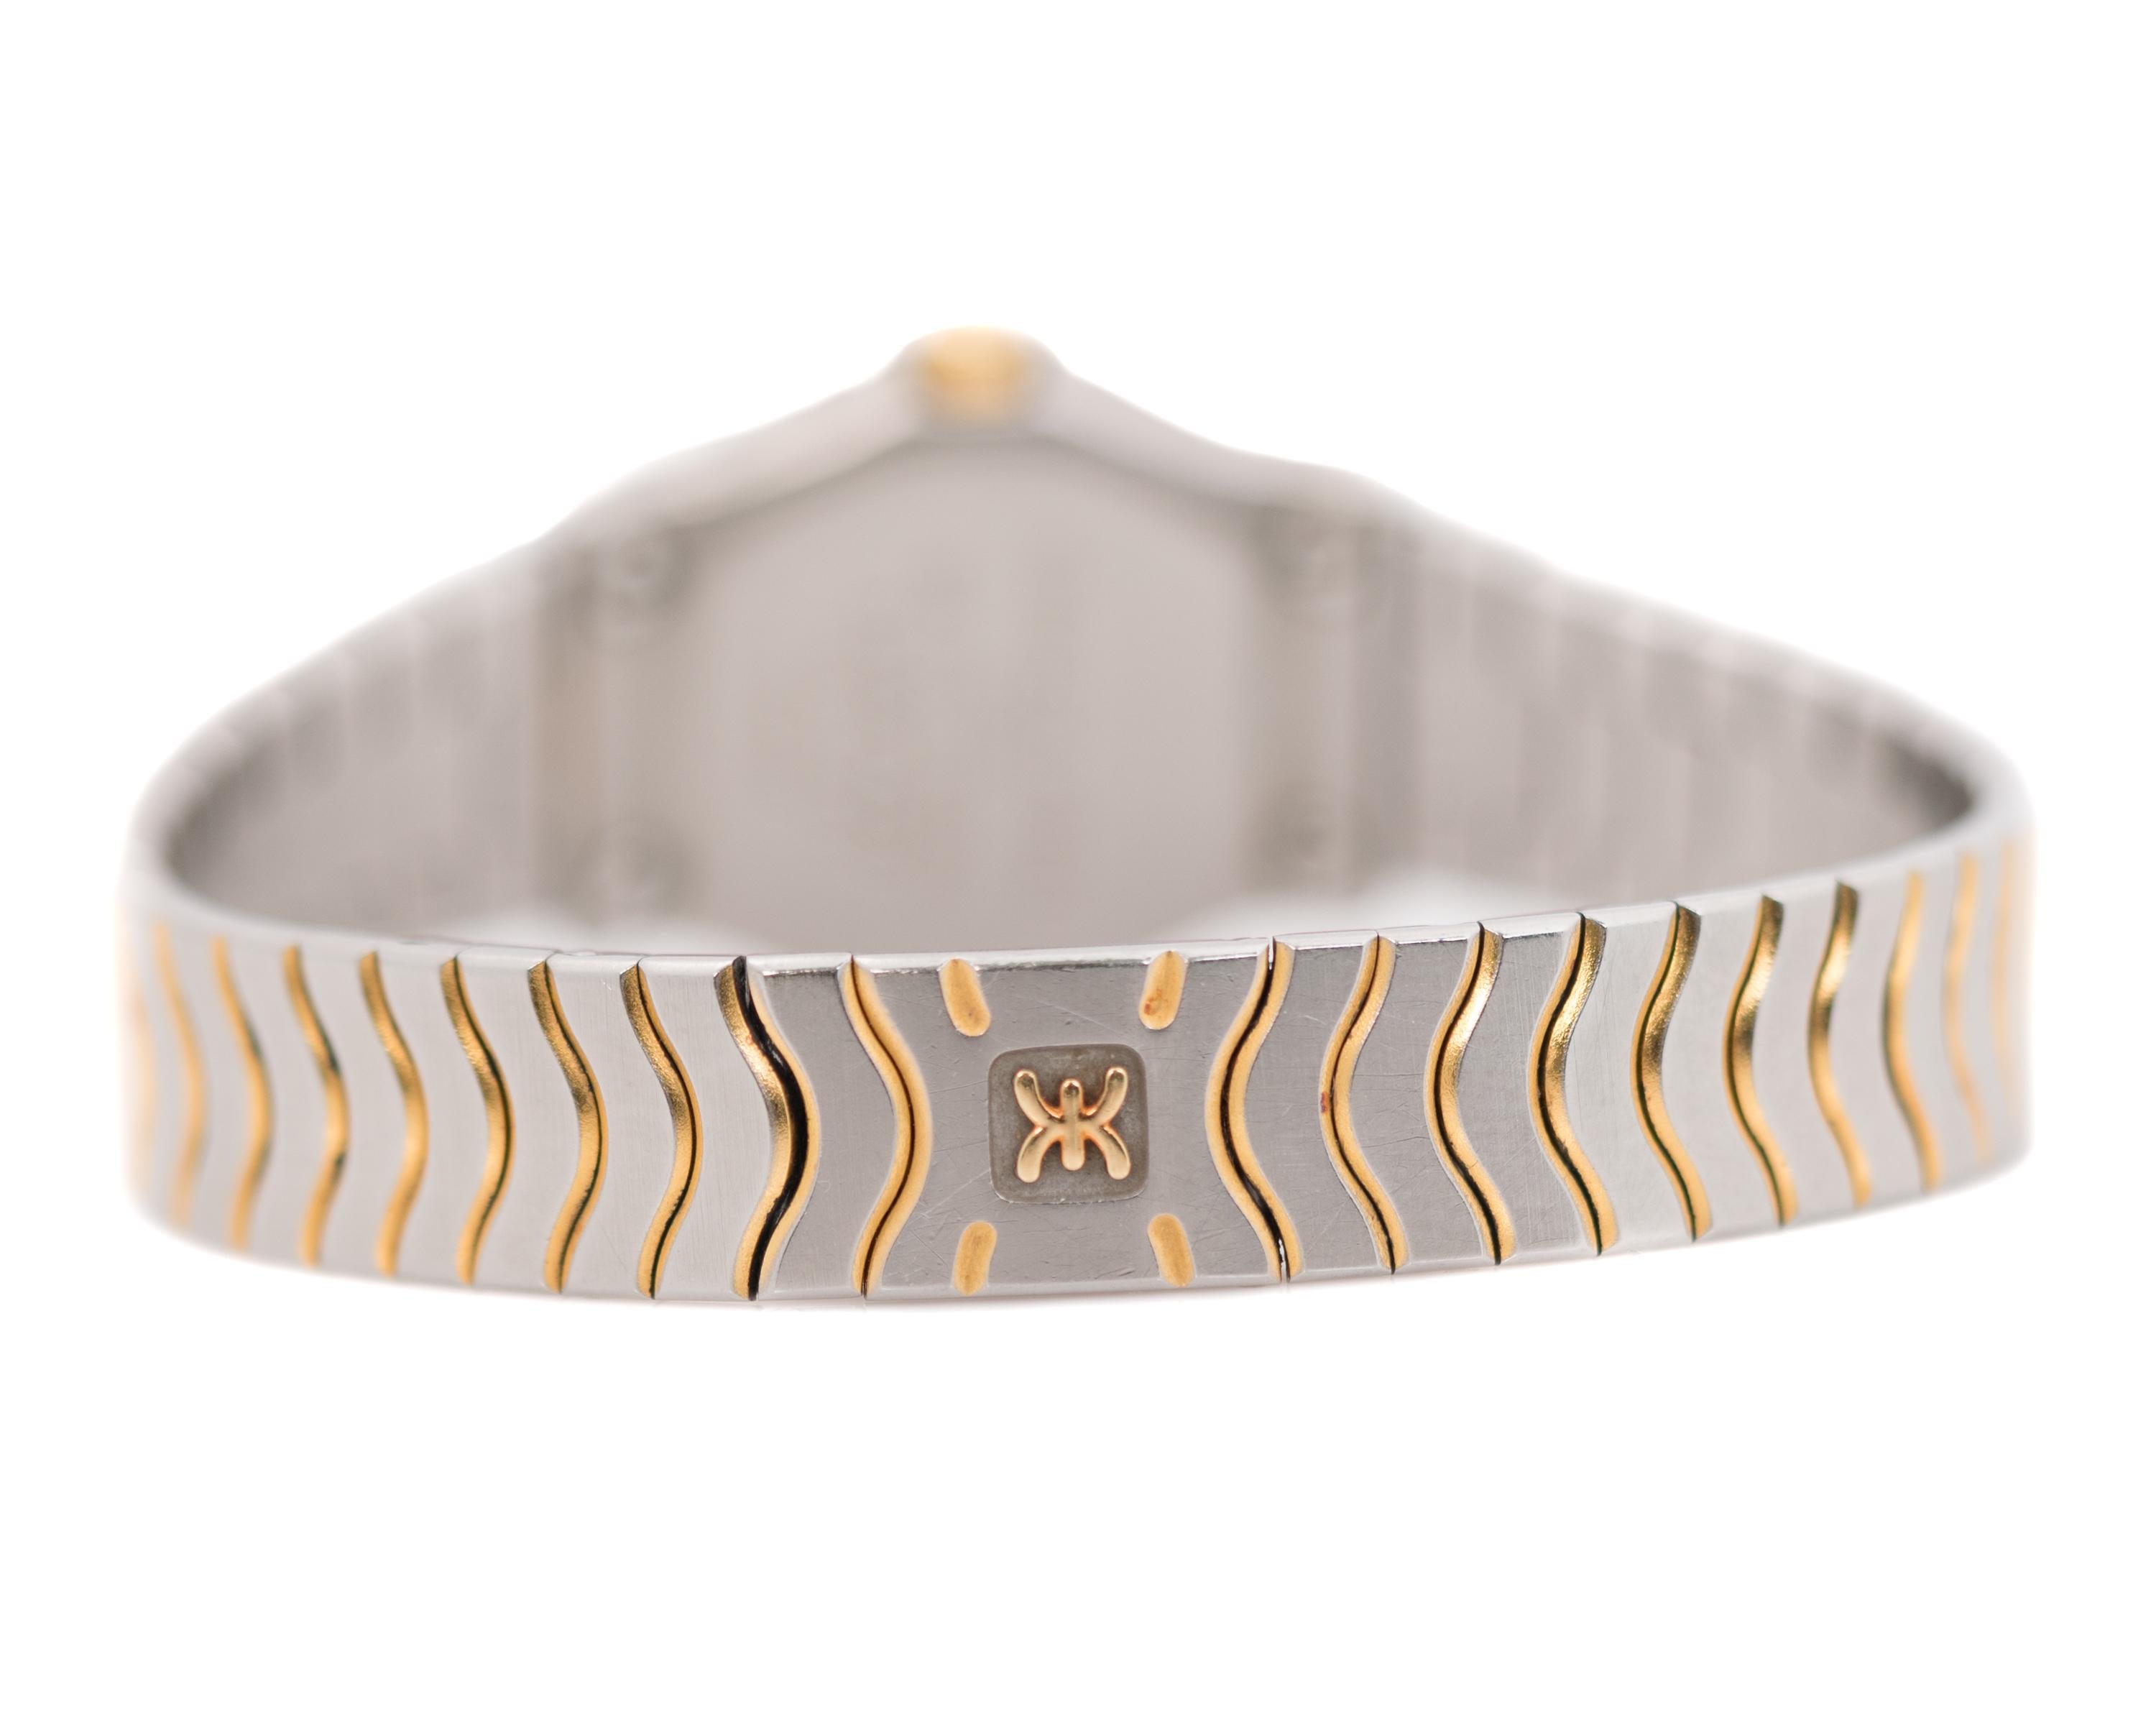 Contemporary Ebel Ladies 18K Yellow Gold, Stainless Steel & Diamond Quartz Wrist Watch, 1990s